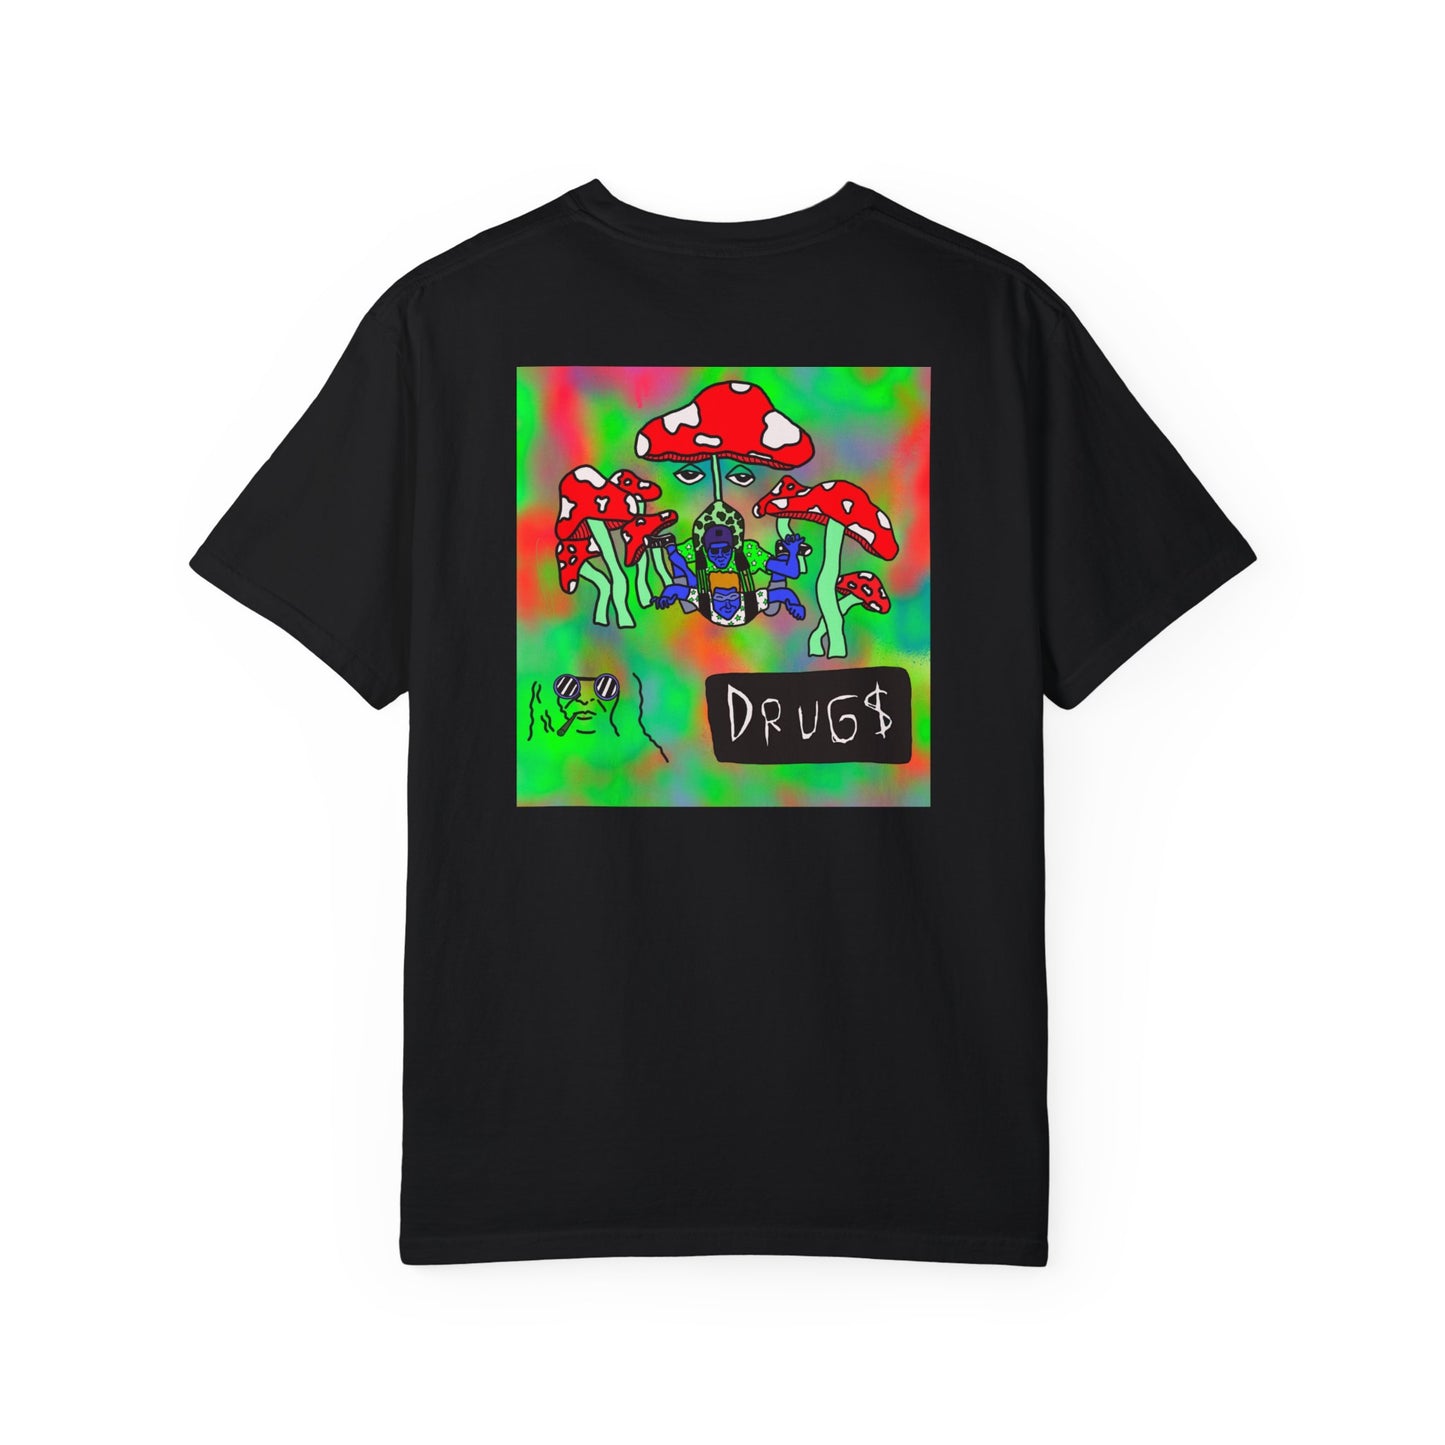 Drug$ T-shirt